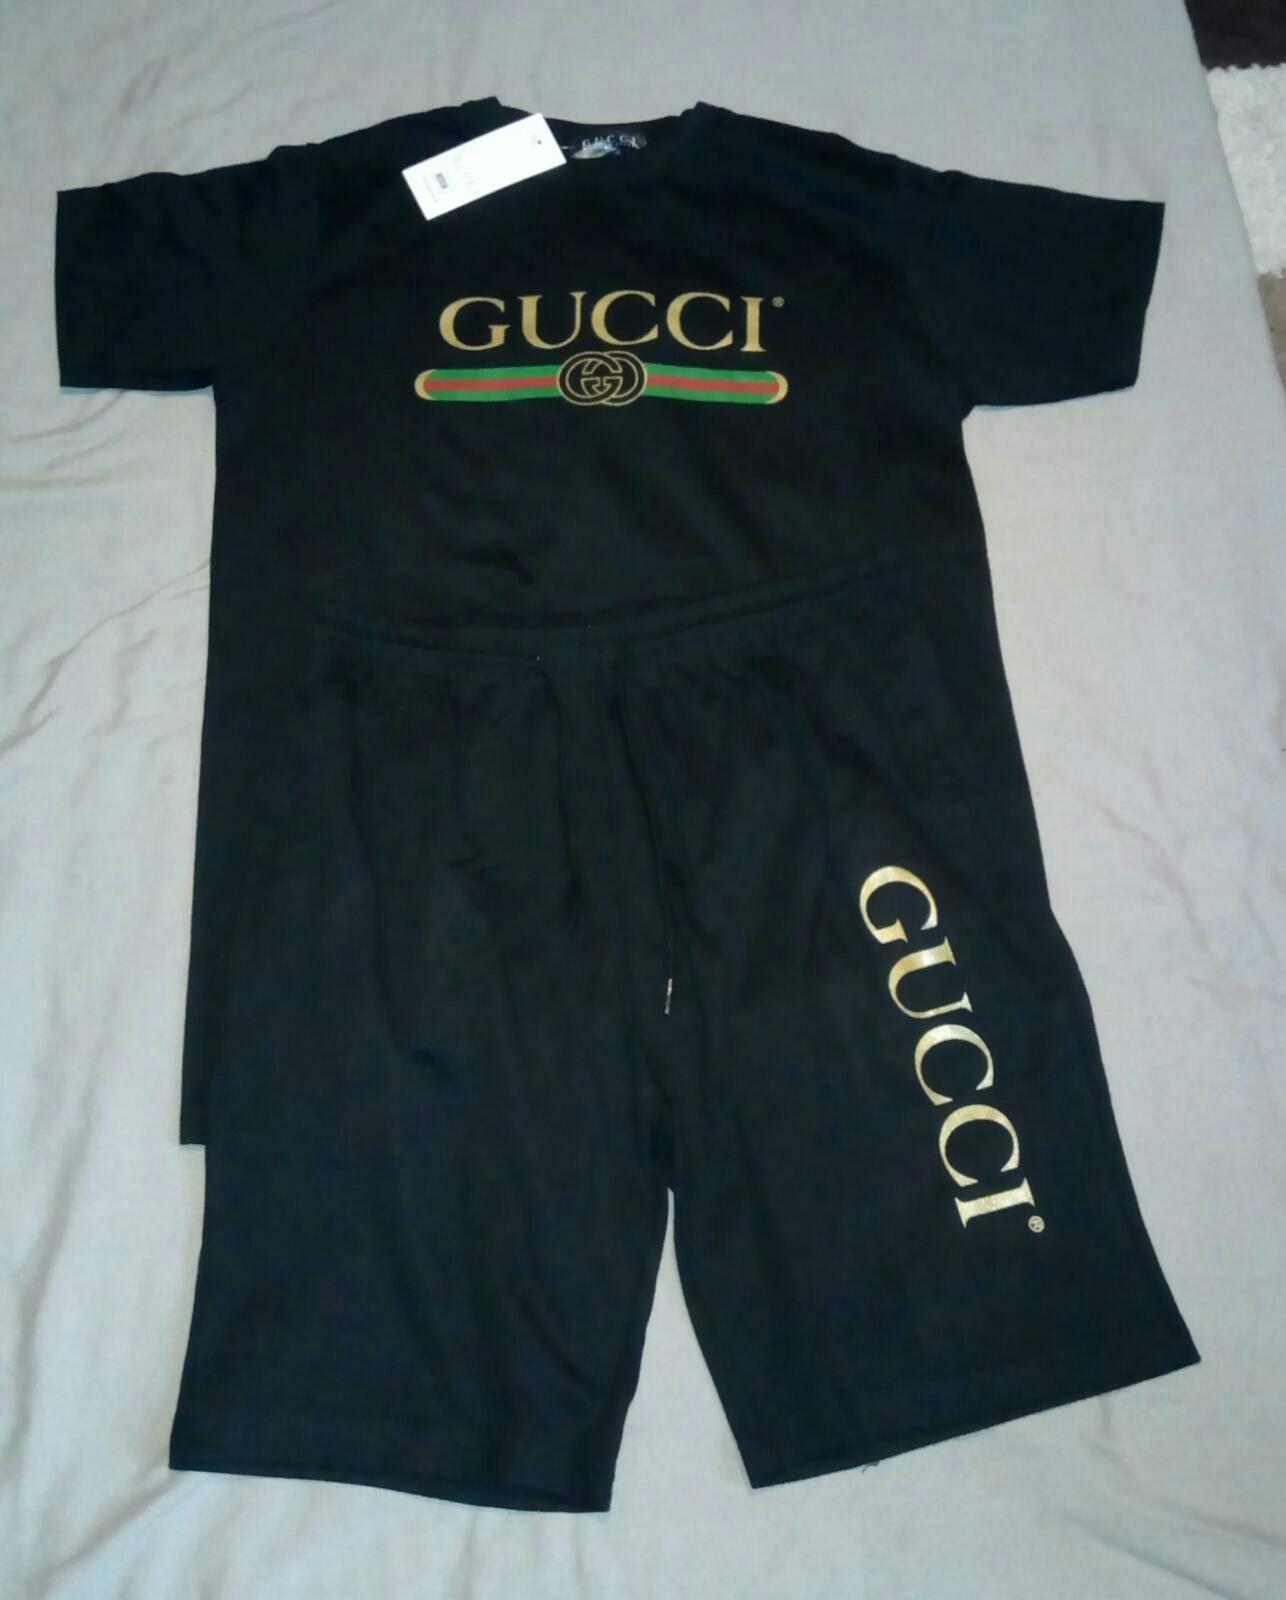 Gucci Clothes For Roblox Buyudum Cocuk Oldum - roblox white gucci shirt id t shirt designs